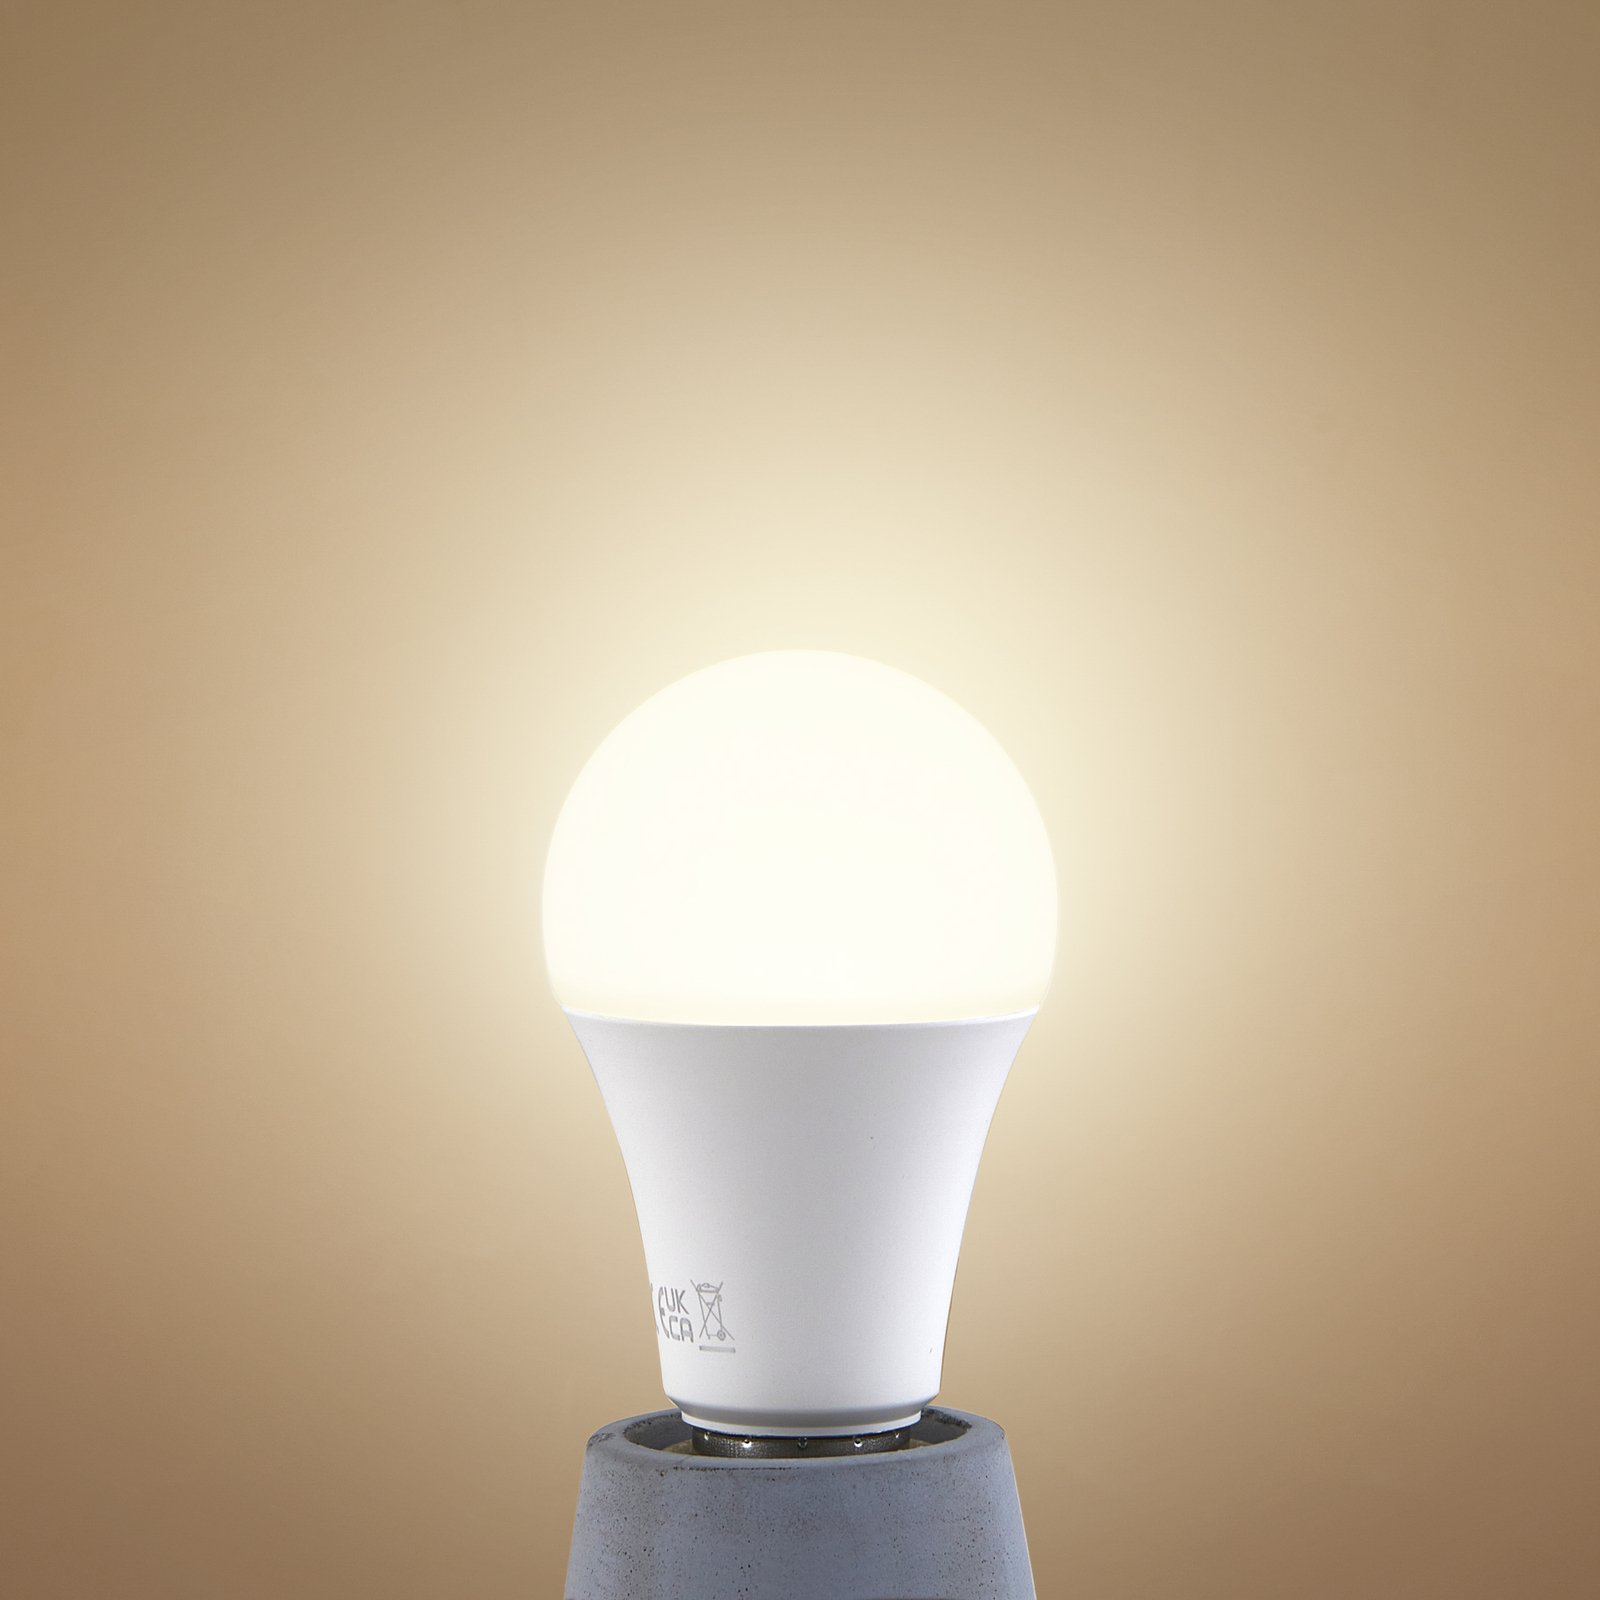 LED lamp, opaal, E27, A60, 8,2W, 2700K, 1521 Lumen